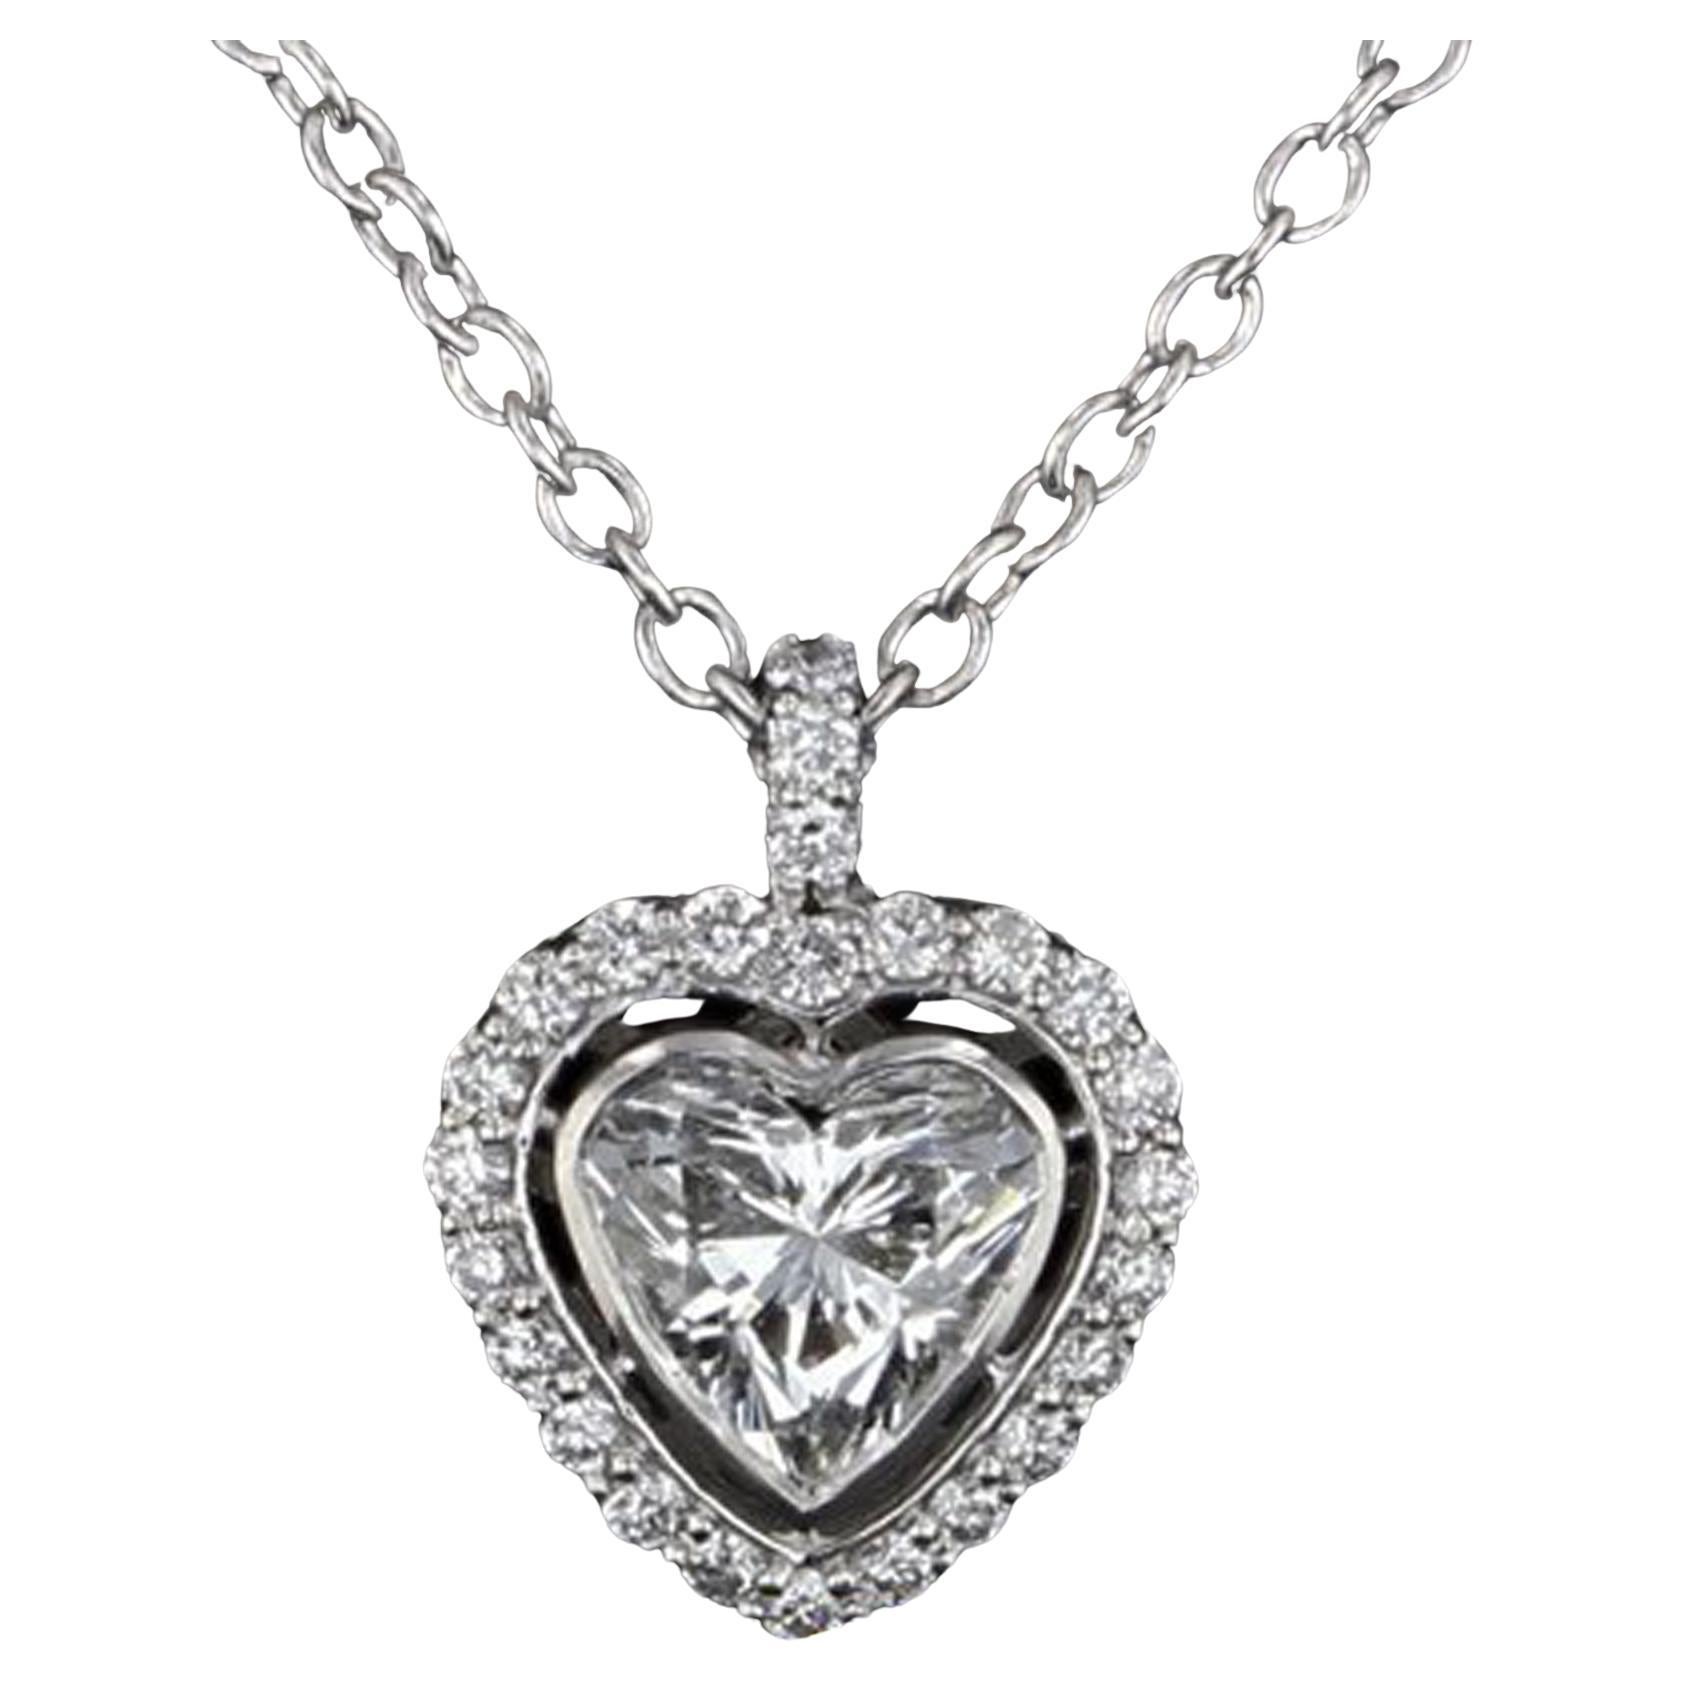 Alex & Co "Forever Heart" 0.66ct Heart Cut Diamond & Pave 18K Pendant Necklace For Sale